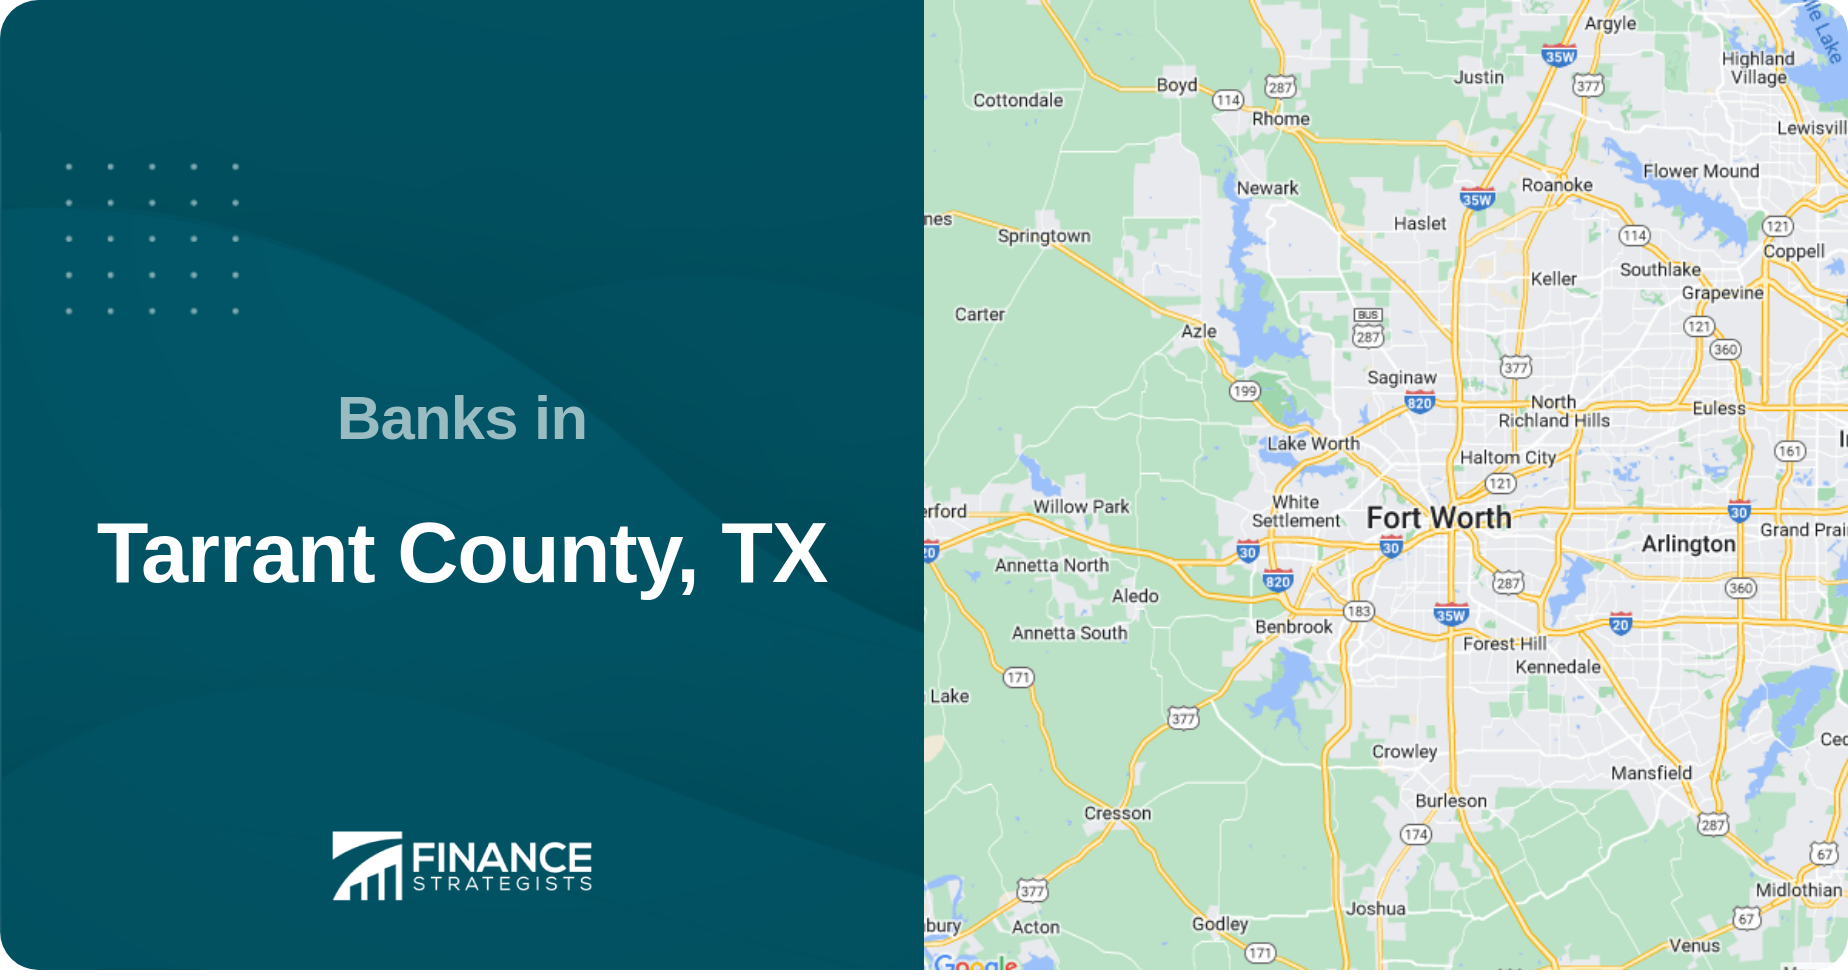 Banks in Tarrant County, TX